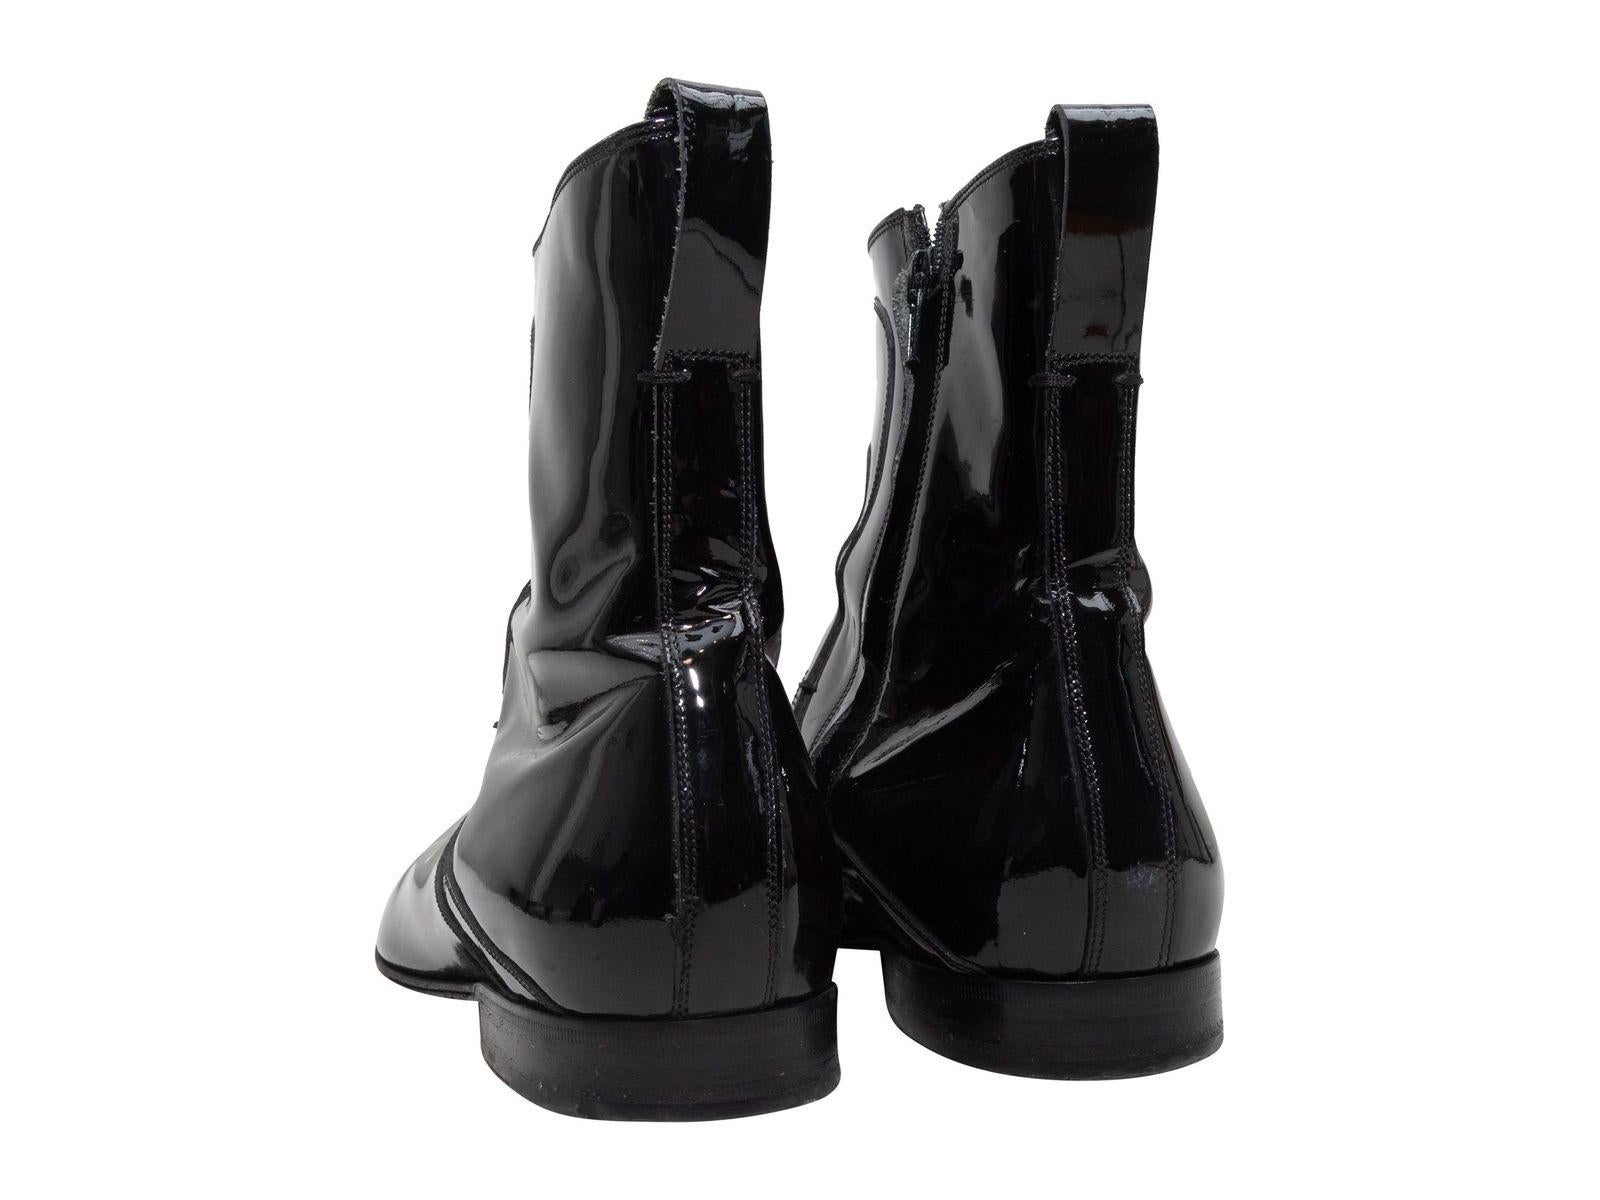 Men's Dior Homme Black Patent Leather Chelsea Boots